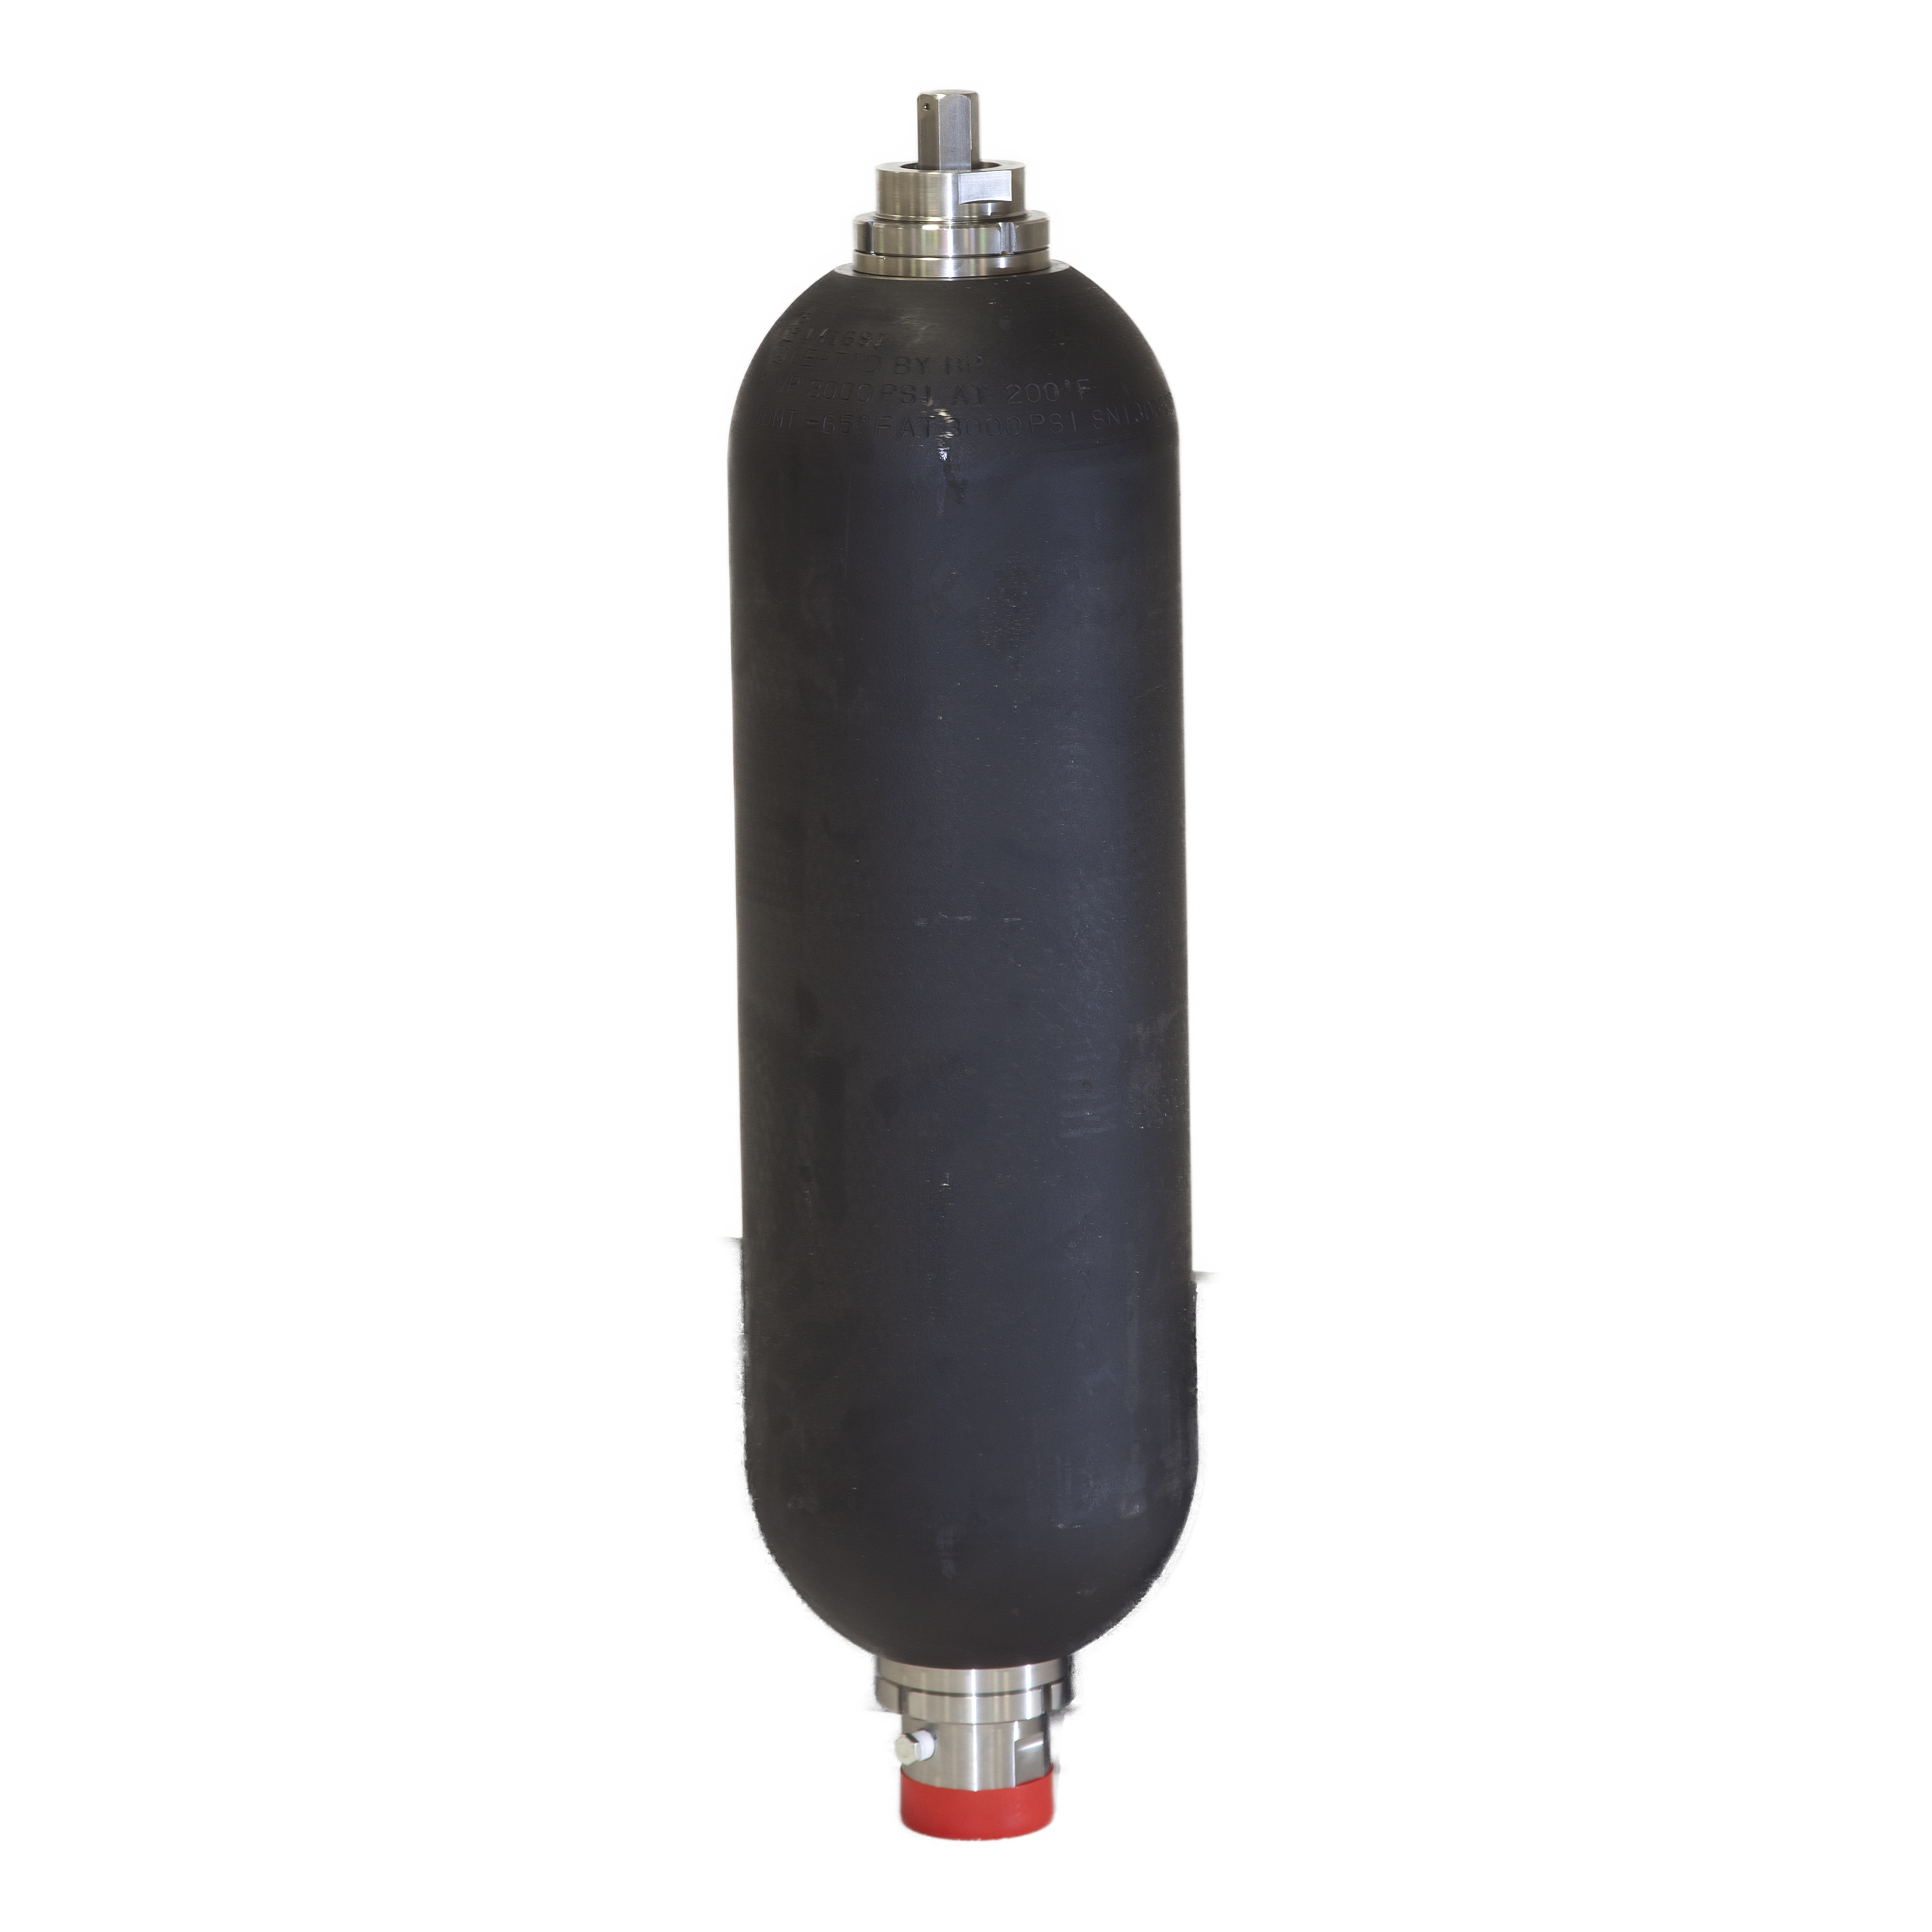 GB20-05-NE-N-O-1-A : SFP Gas Bottles 5000psi, 5000psi, 5 Gallon (20 Liter), 1.25" NPT